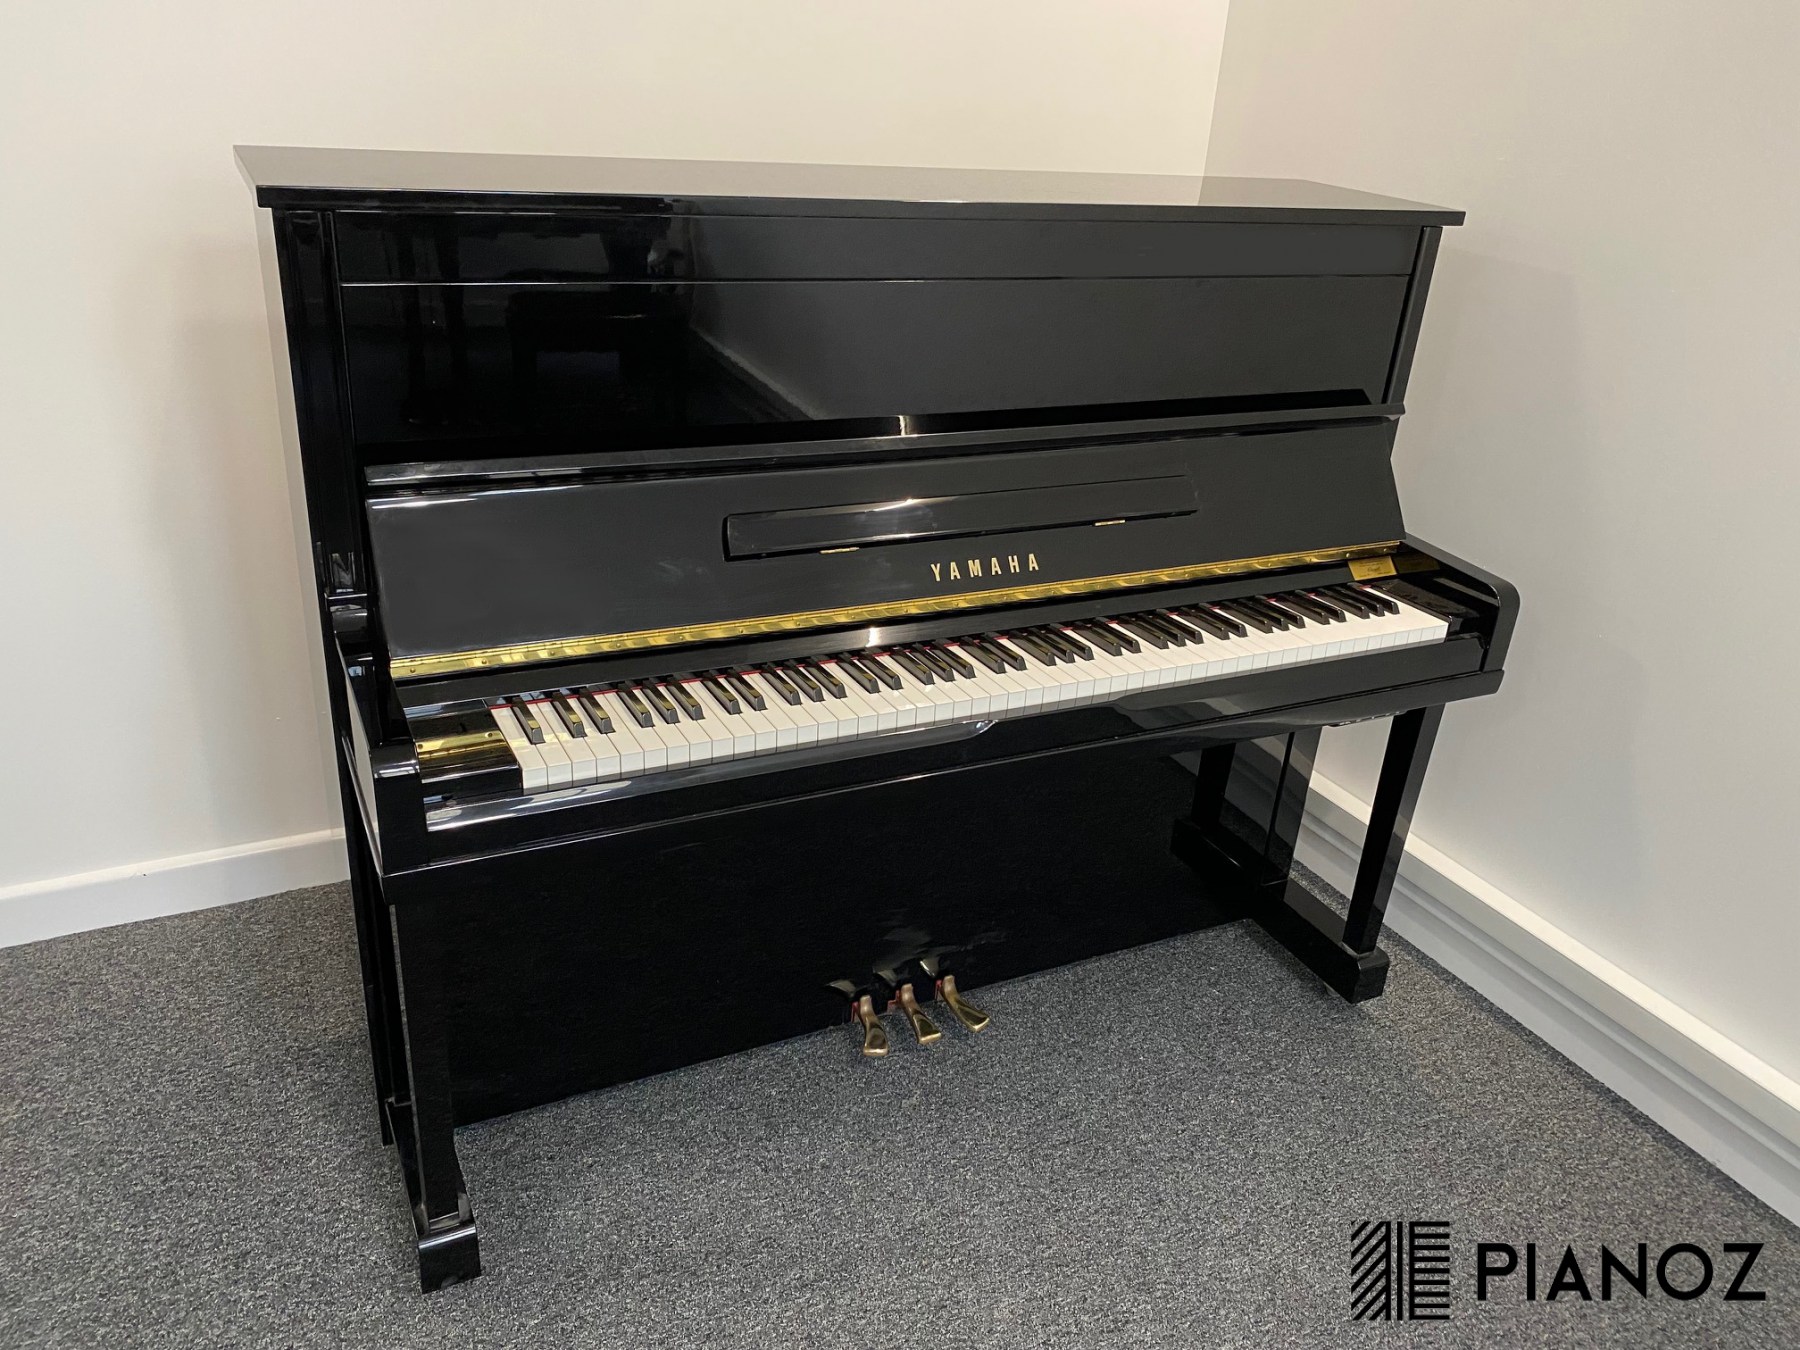 Yamaha U1 Japanese Upright Piano piano for sale in UK